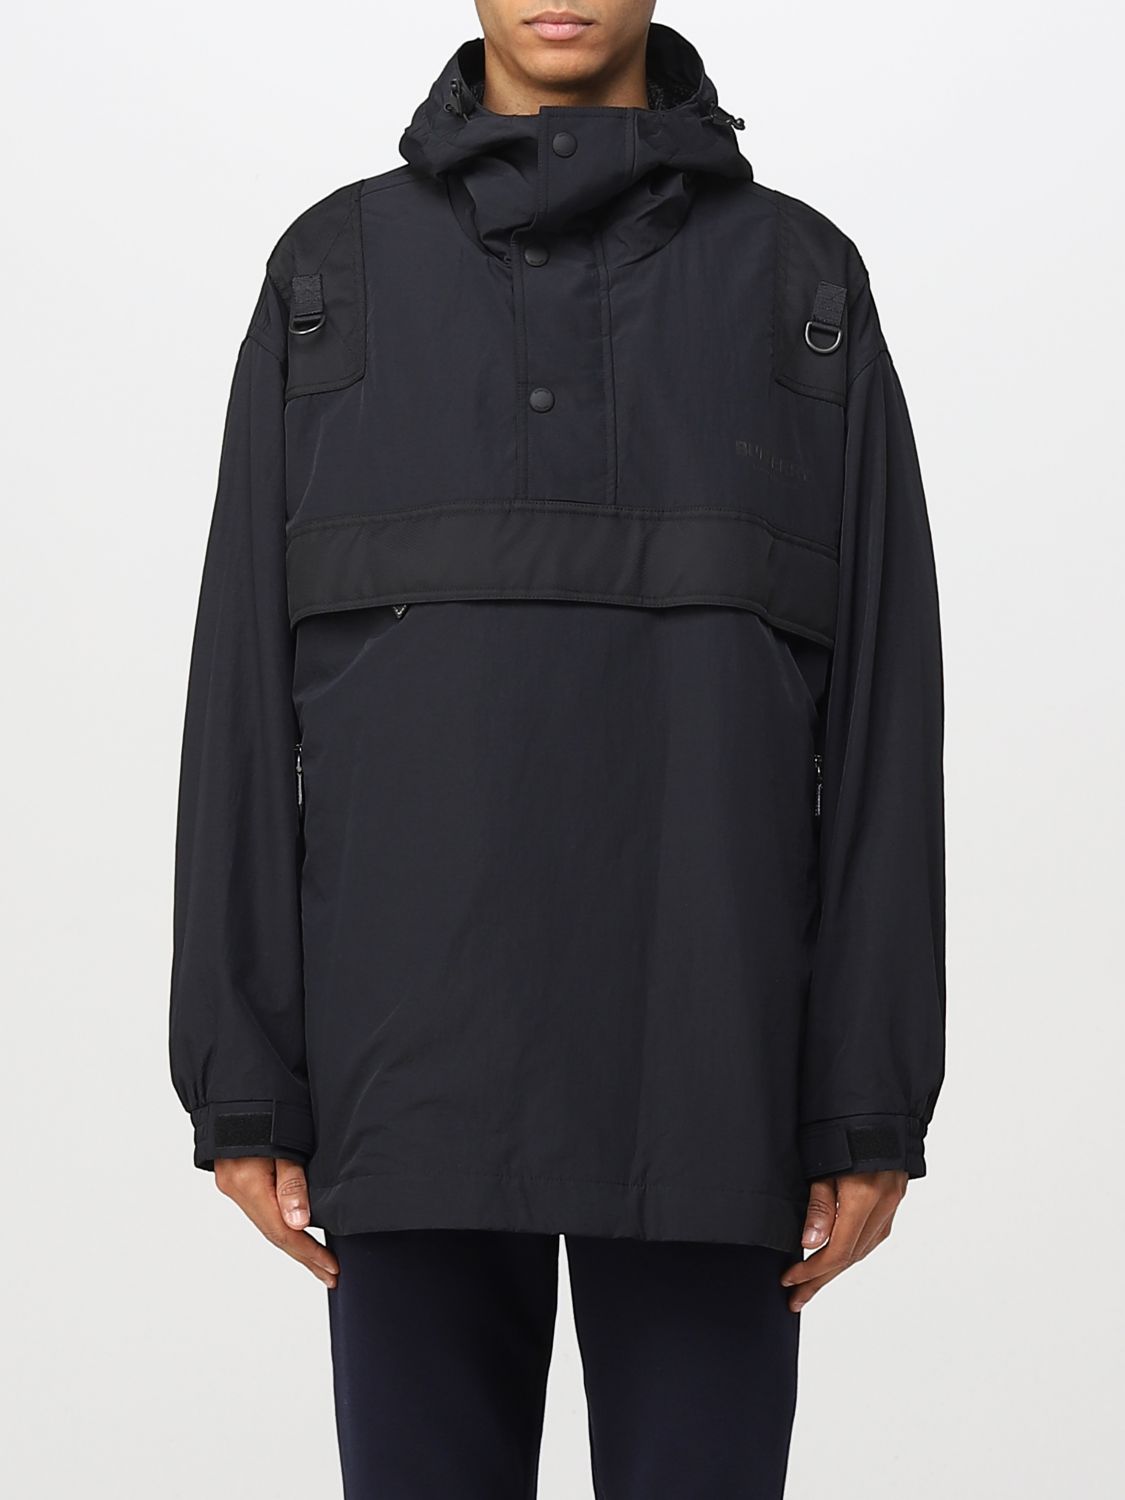 BURBERRY: jacket for man - Black | Burberry jacket 8054441 online on ...